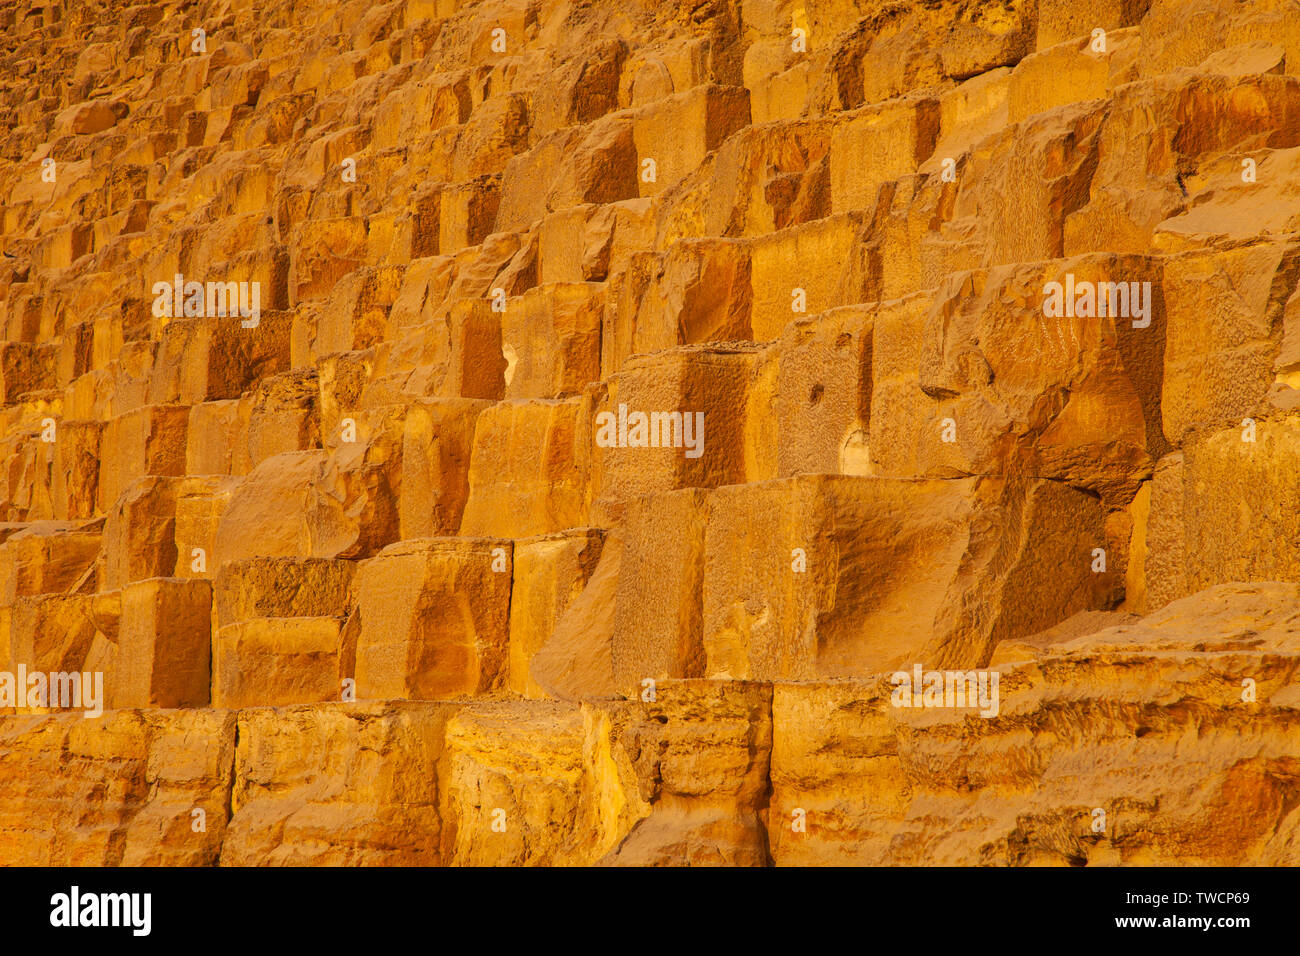 La Gran Pirámide, Meseta de Giza, El Cairo, Valle del Nilo, Egipto. Stock Photo